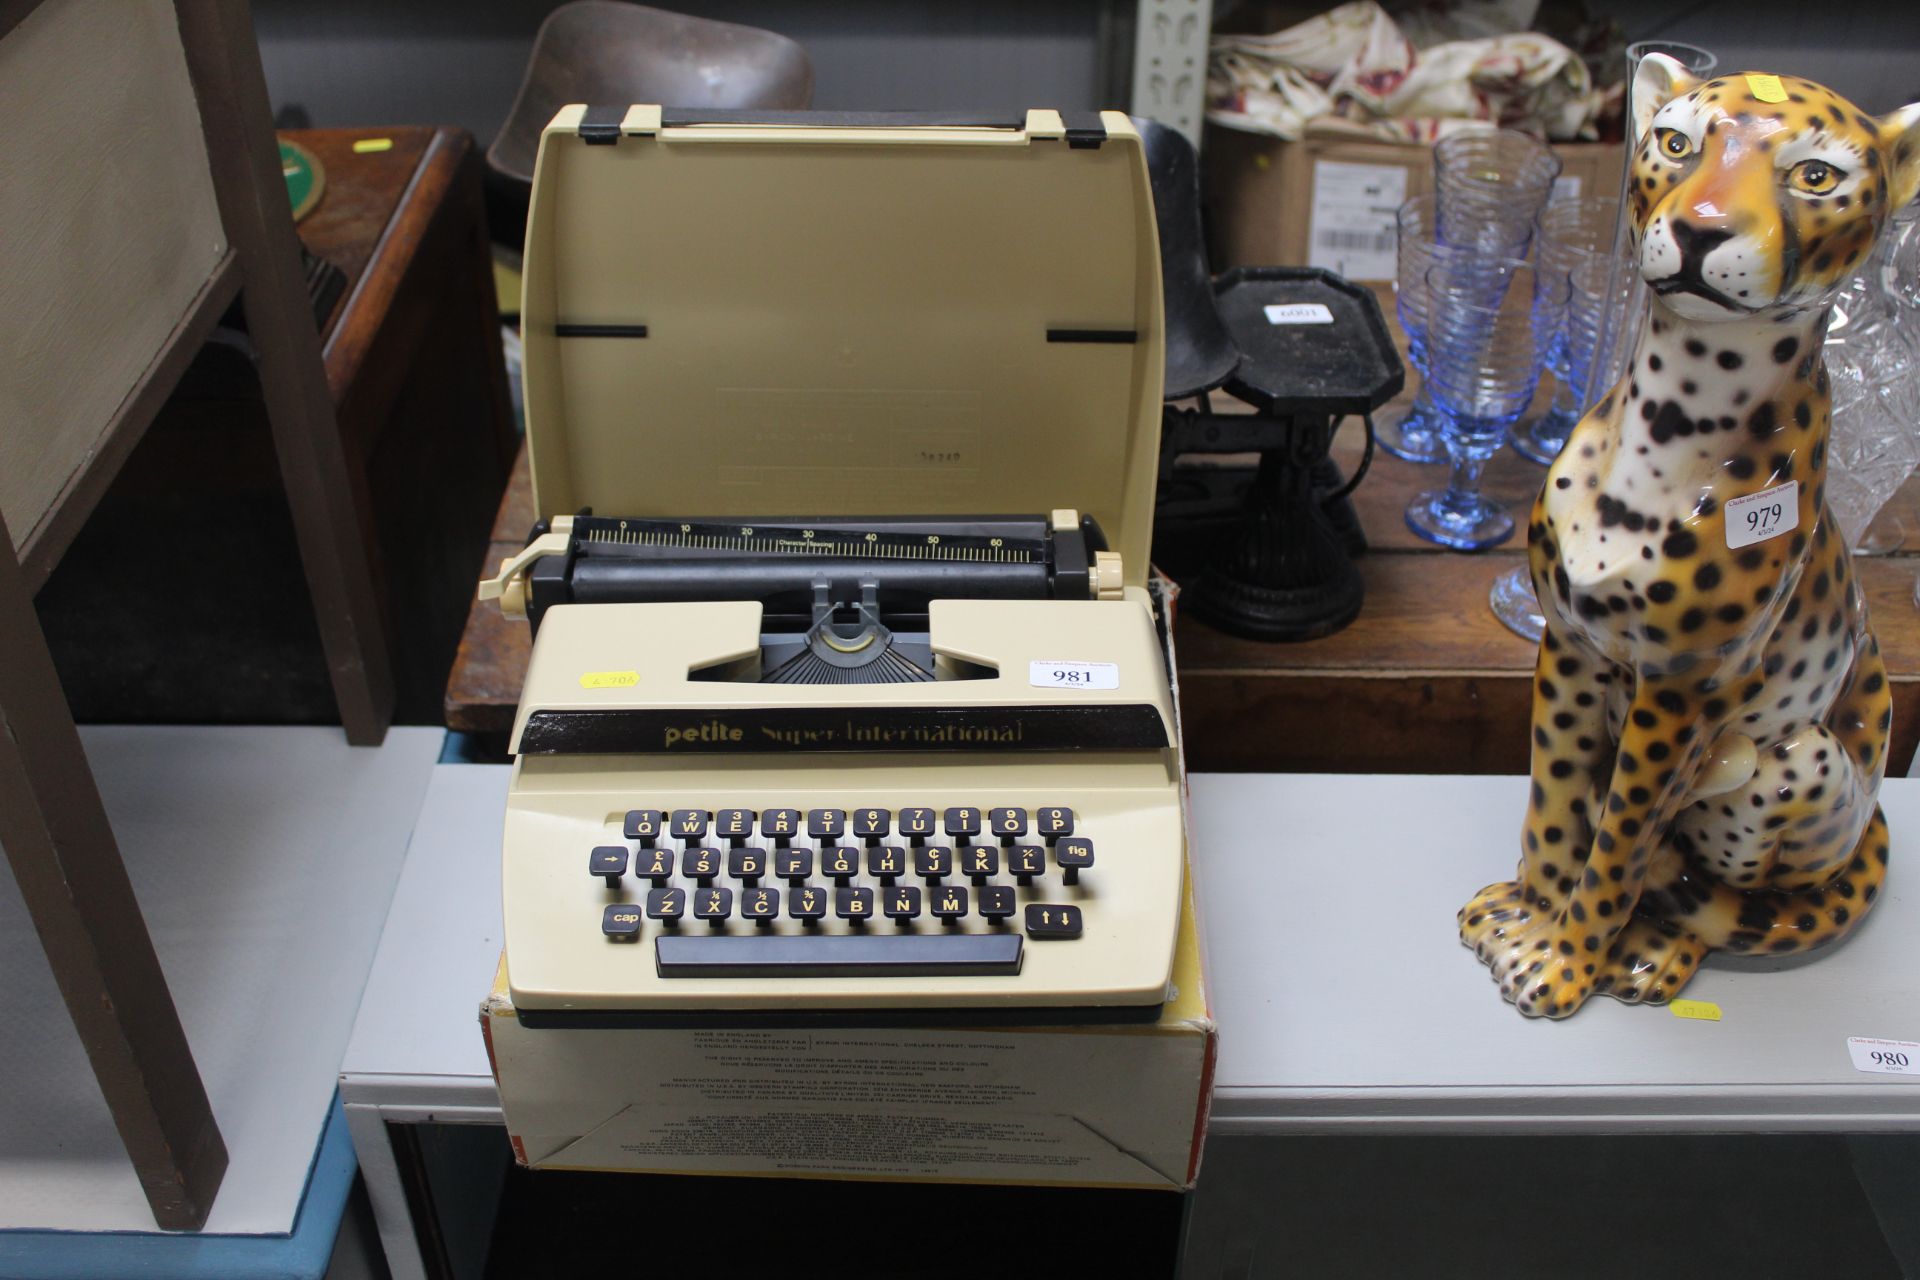 A Petite Super International portable typewriter w